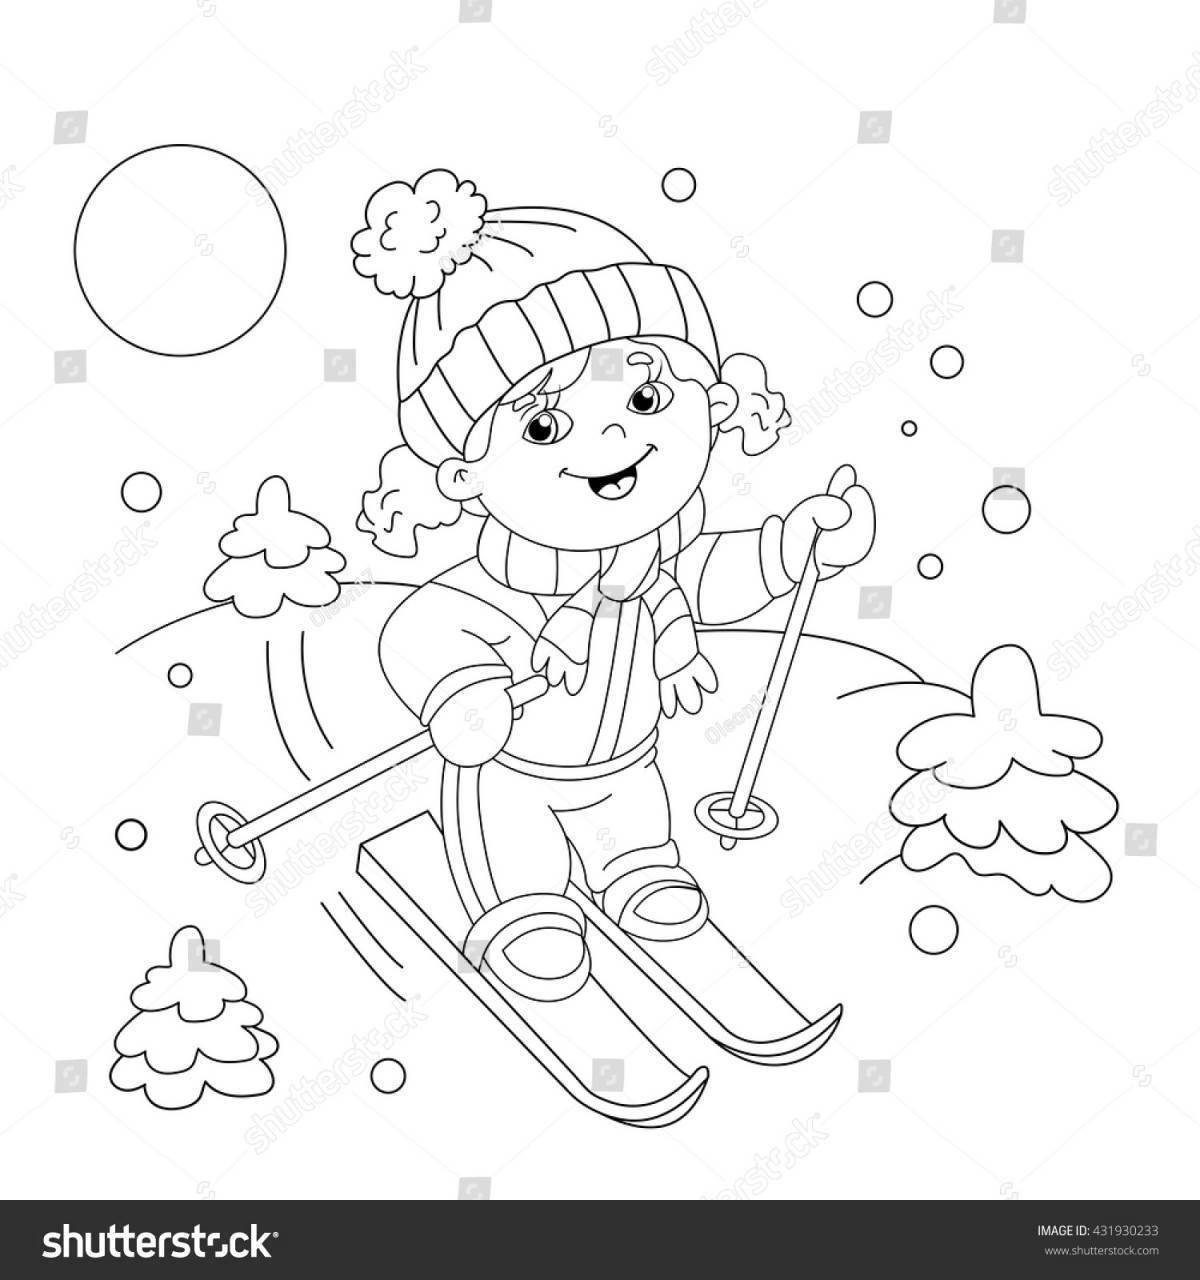 Luminous picture with winter sports for children in kindergarten